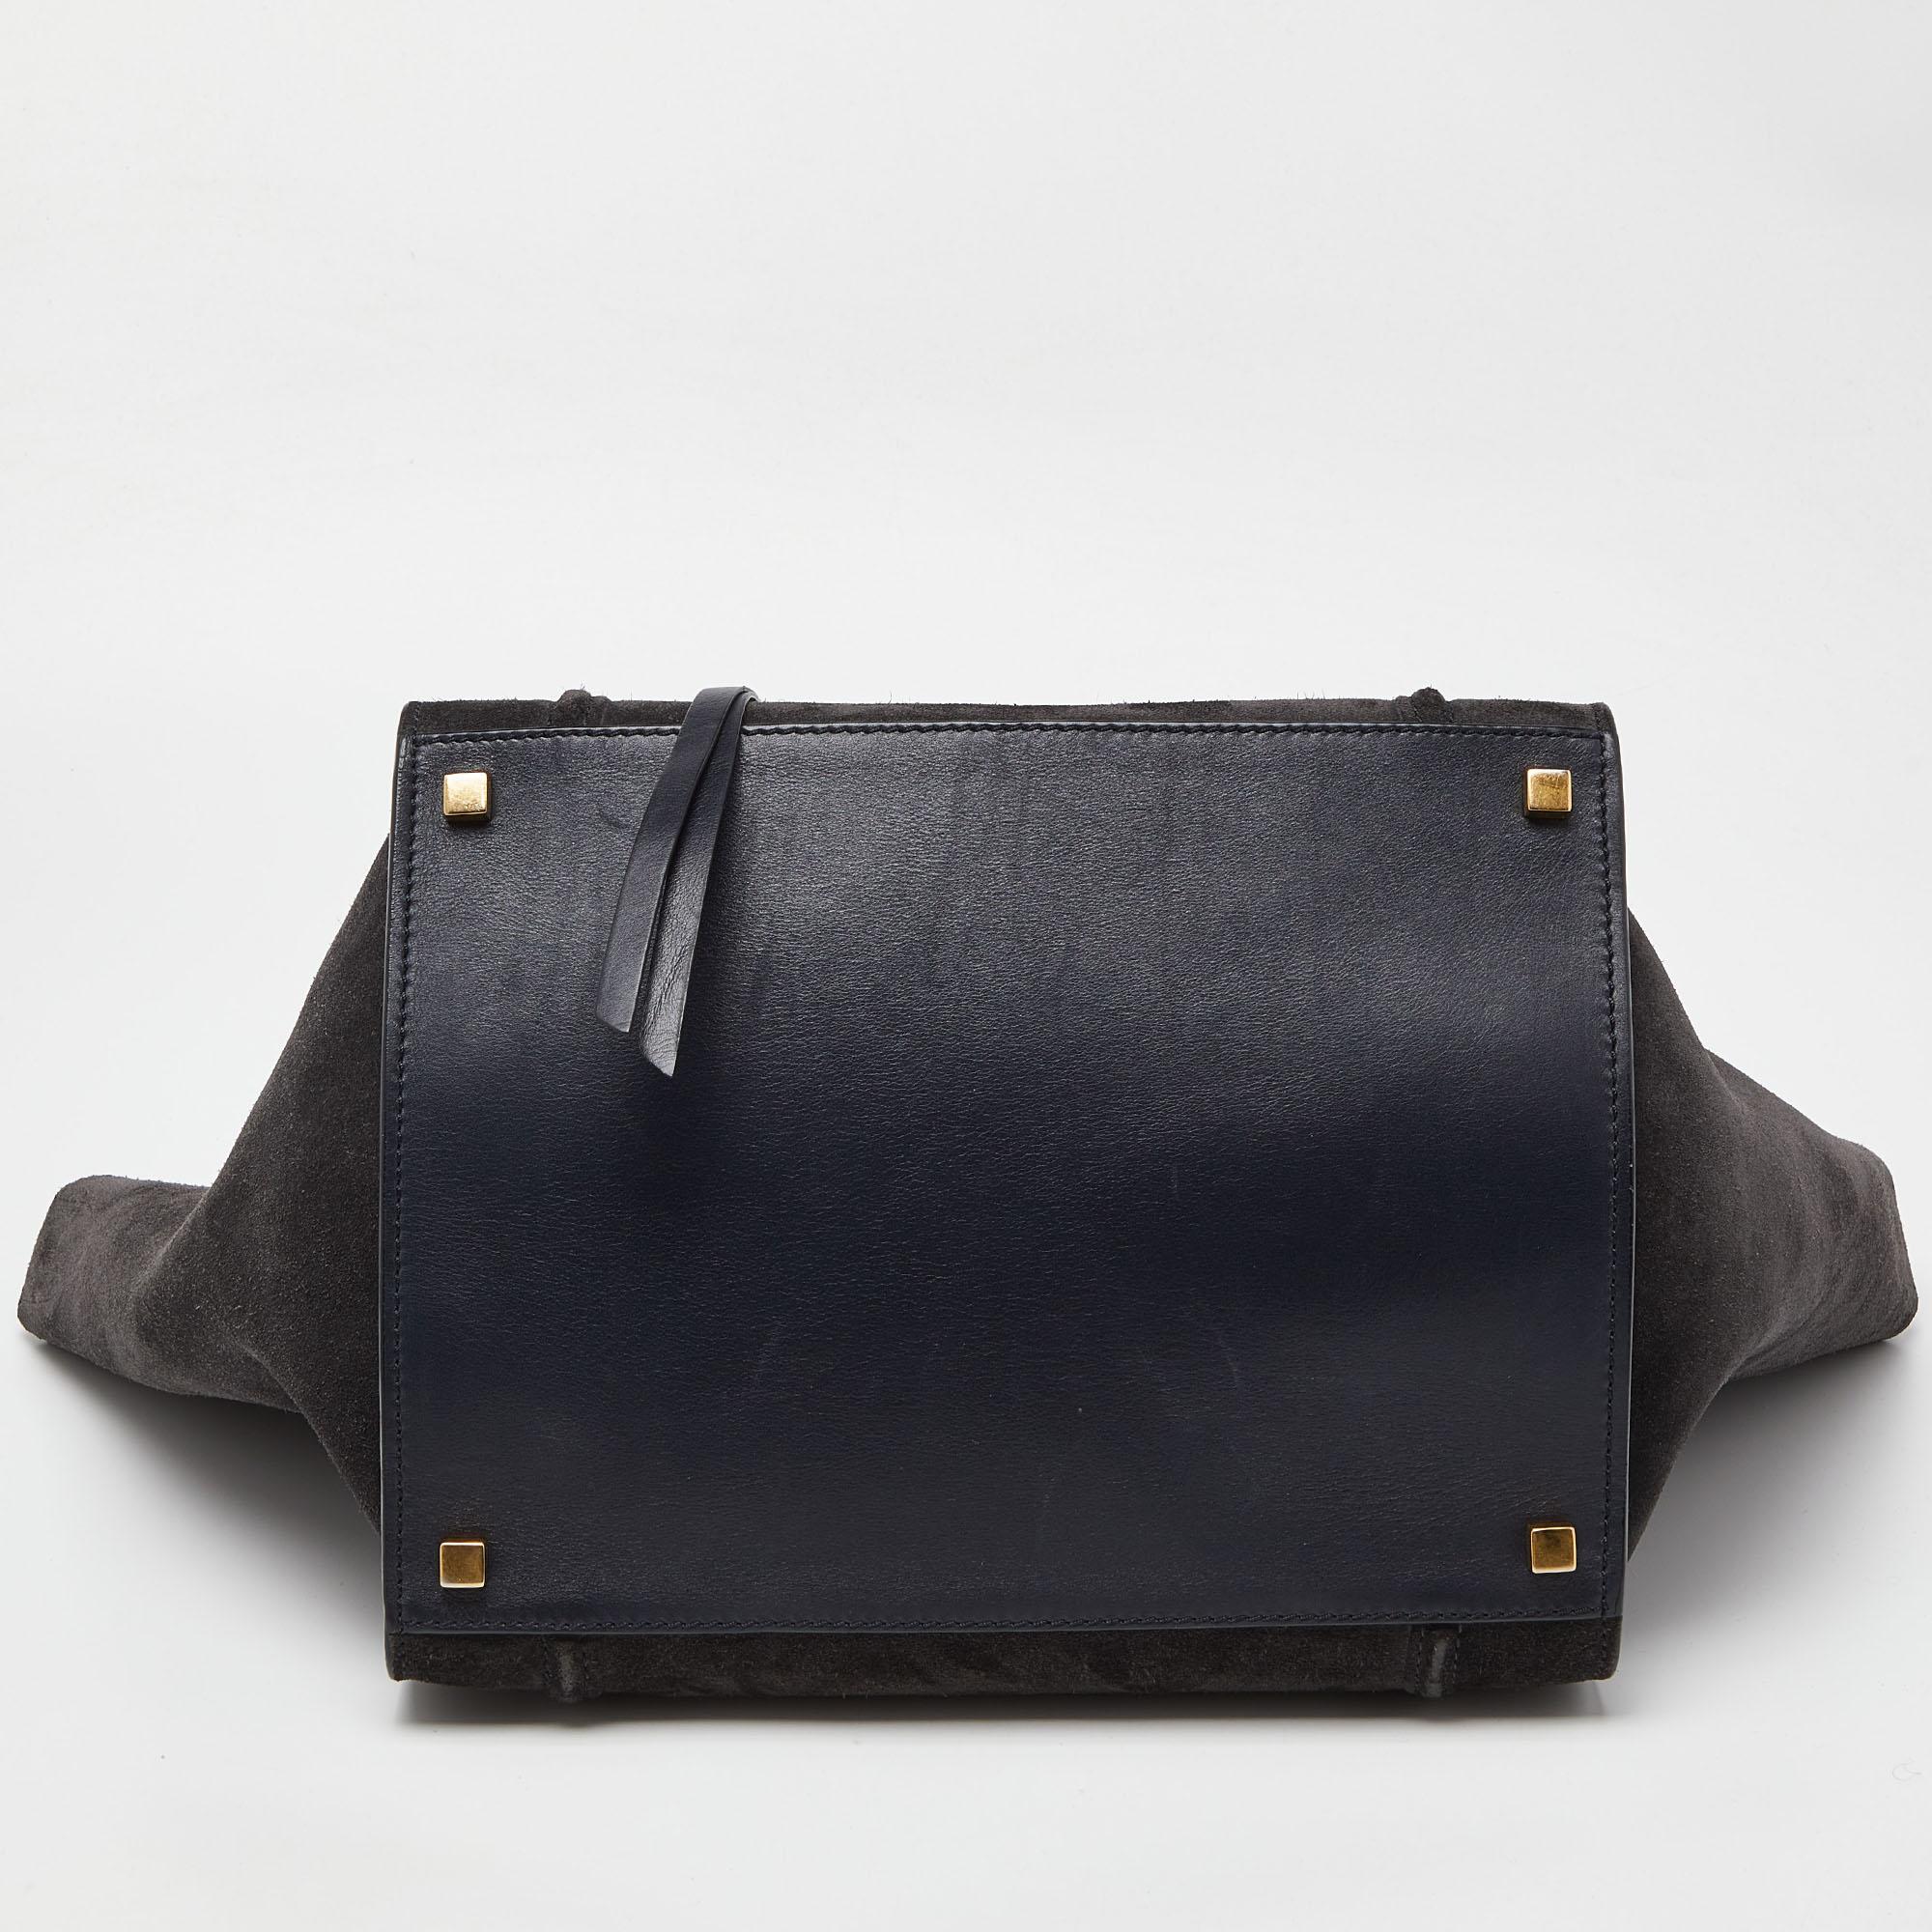 Celine Dark Grey/Dark Blue Suede and Leather Medium Phantom Luggage Tote For Sale 1